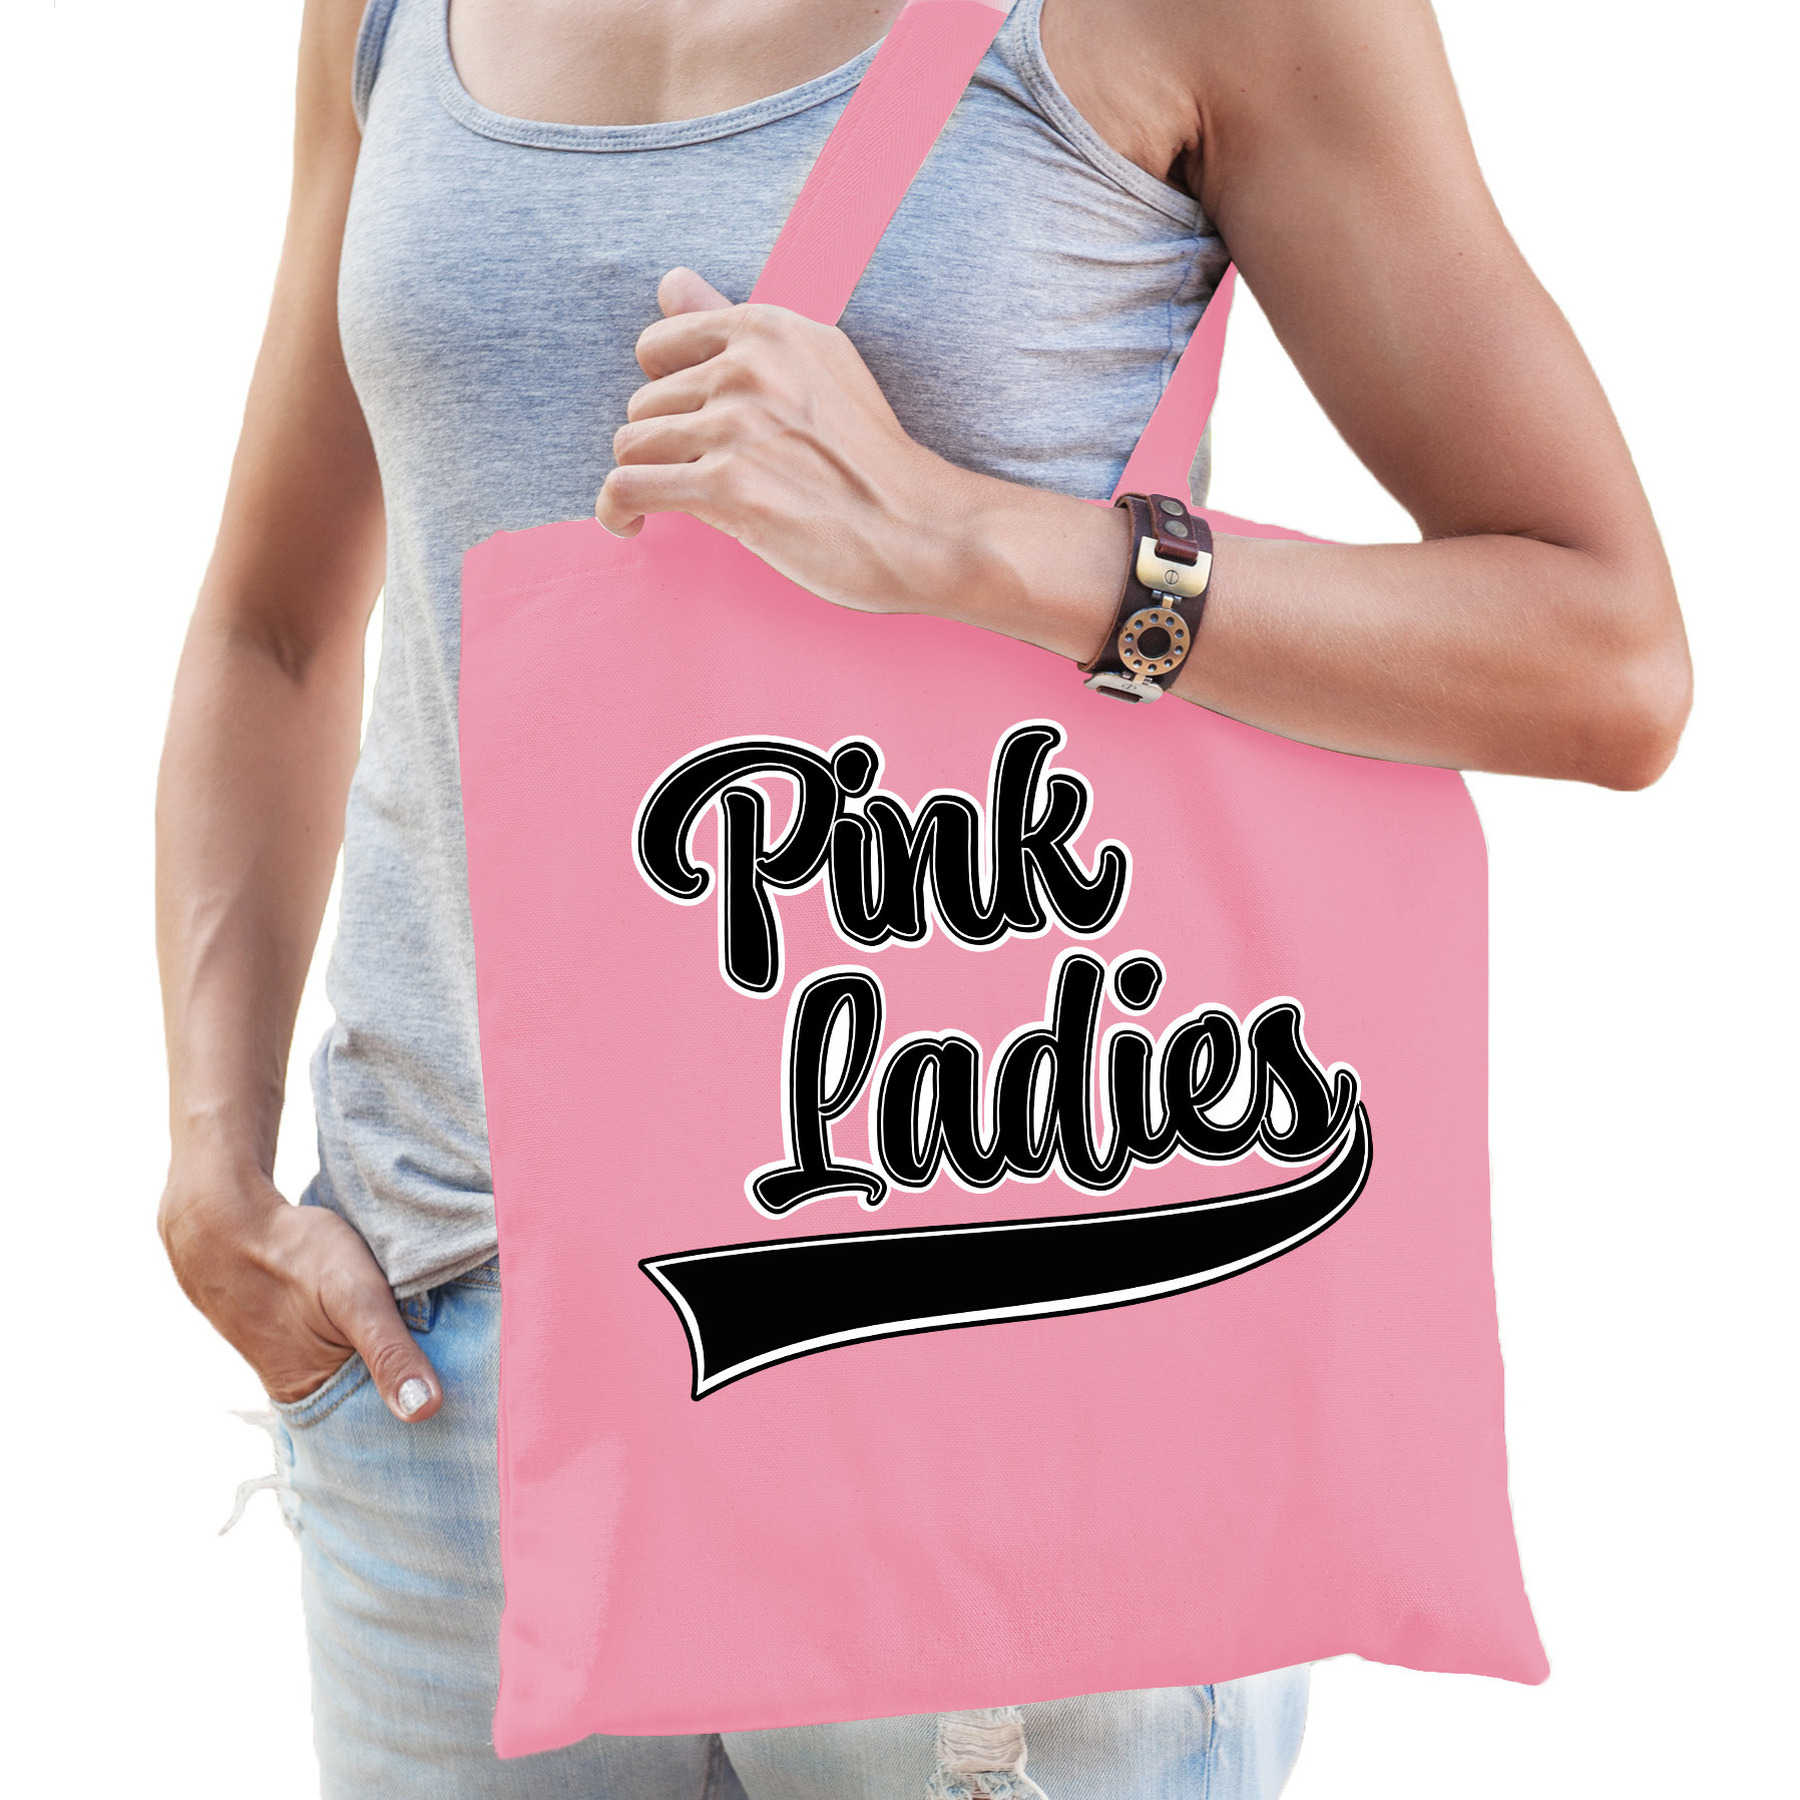 Shopper-tas Grease Pink Ladies 42 x 38 cm roze